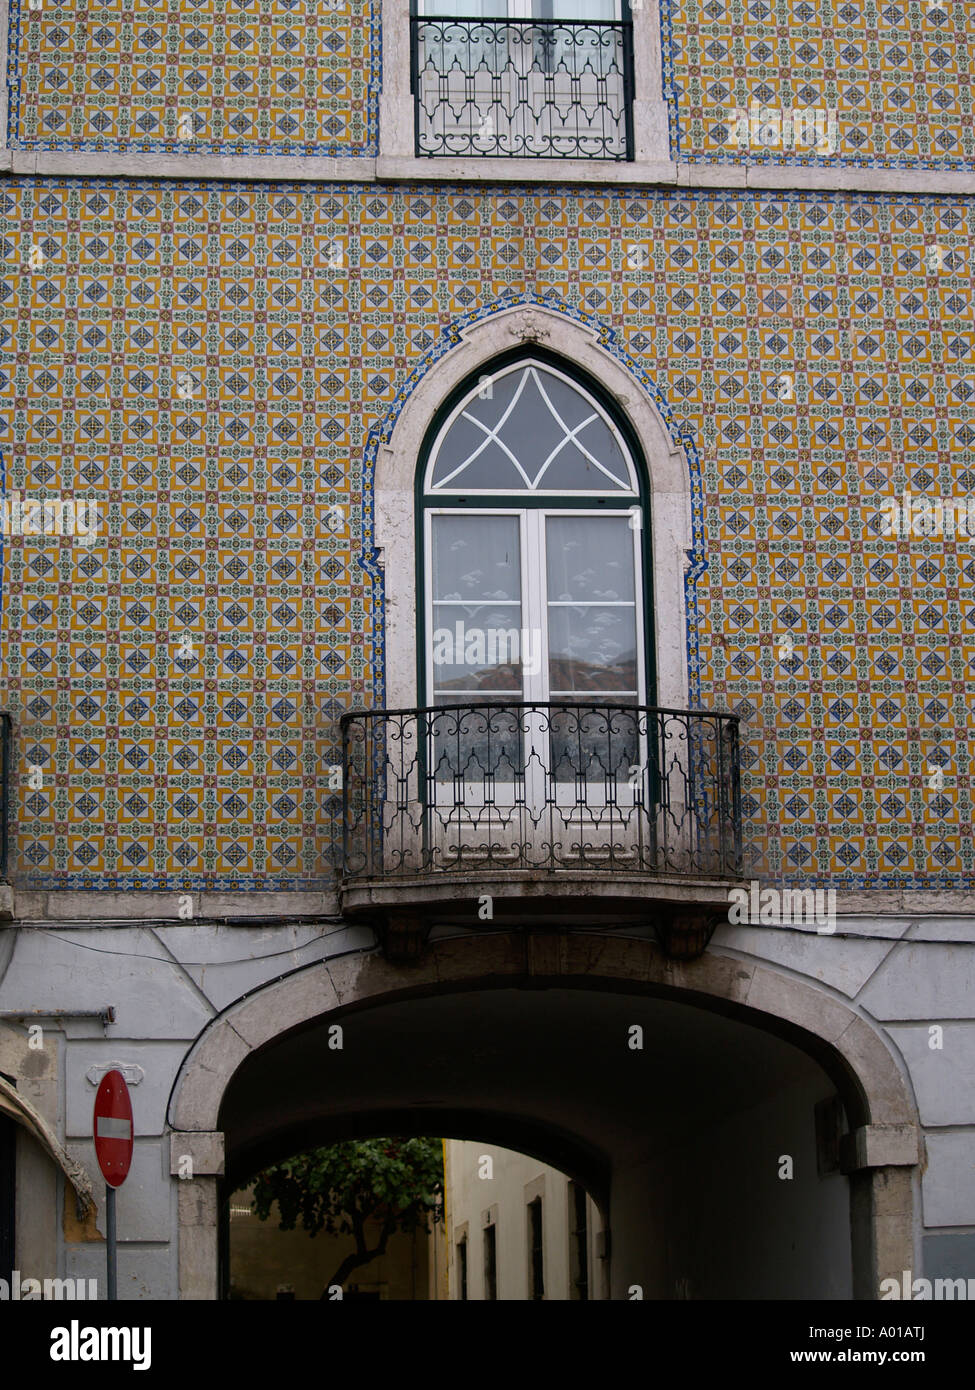 Lisbon tile work Stock Photo